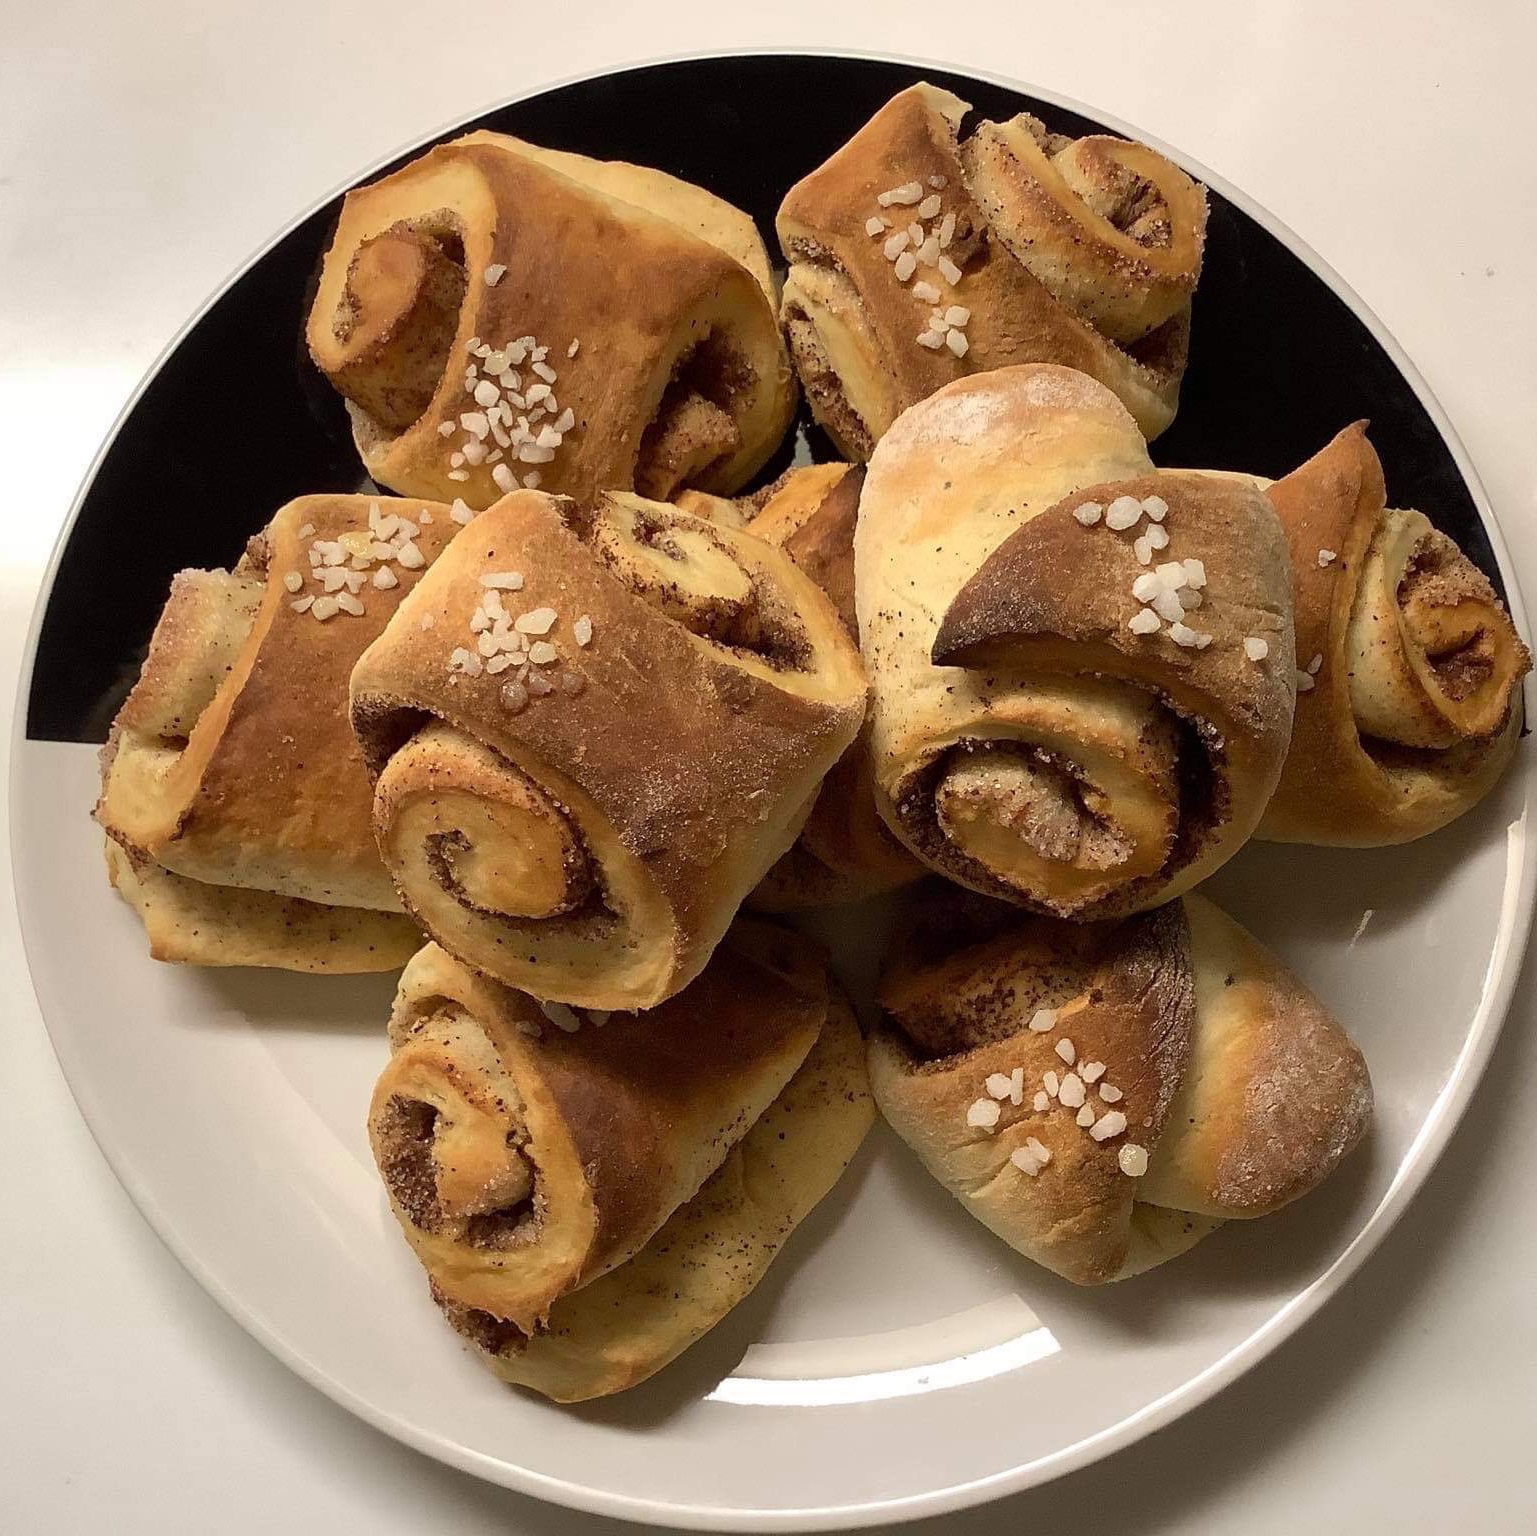 a plate of Finnish style cinnamon buns